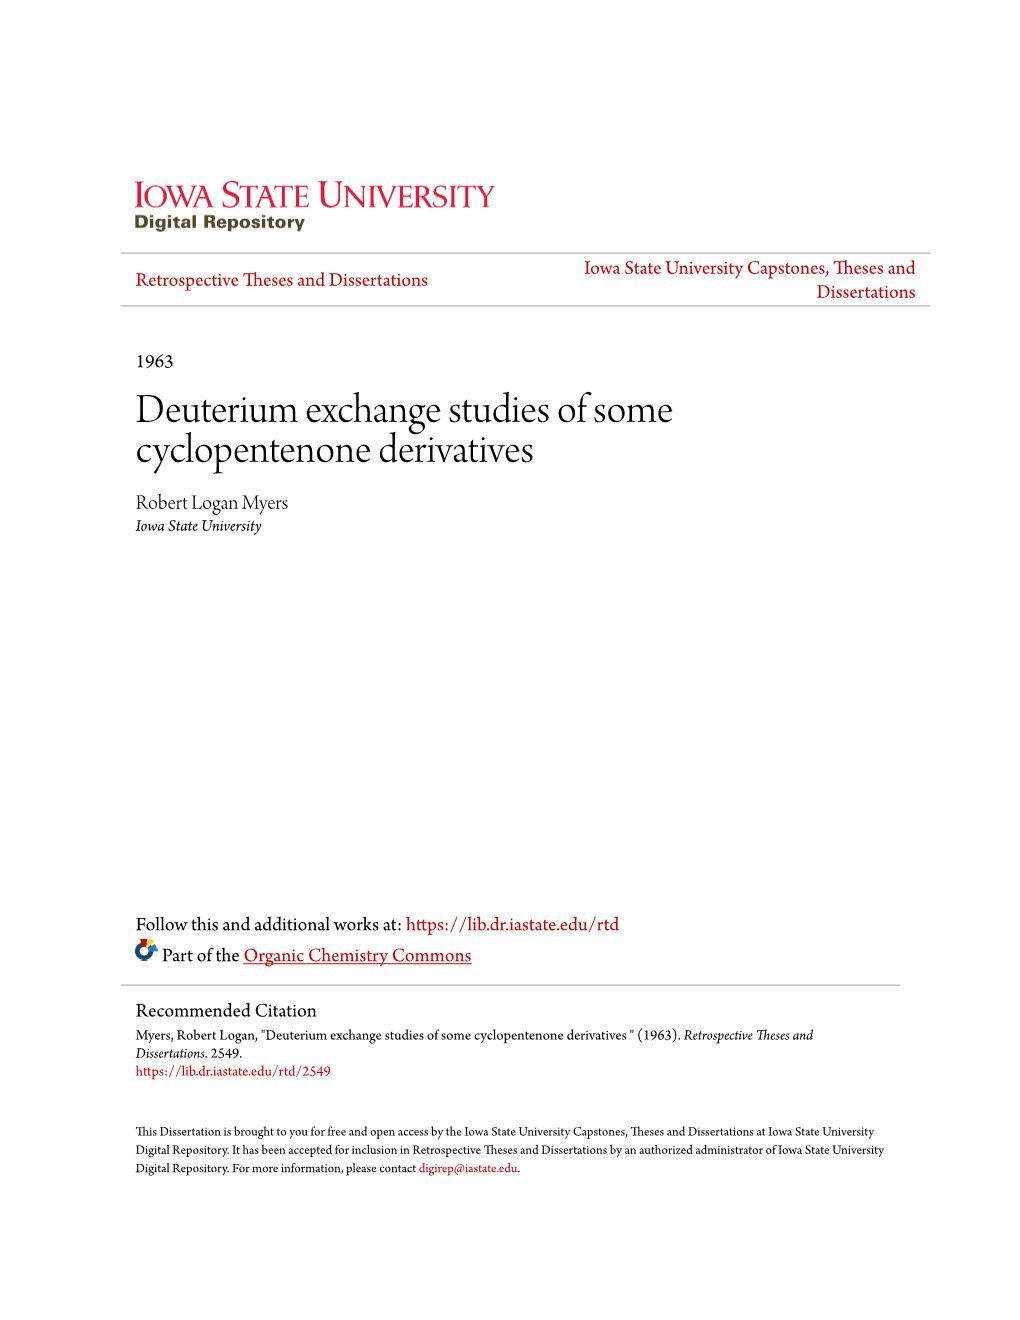 Deuterium Exchange Studies of Some Cyclopentenone Derivatives Robert Logan Myers Iowa State University